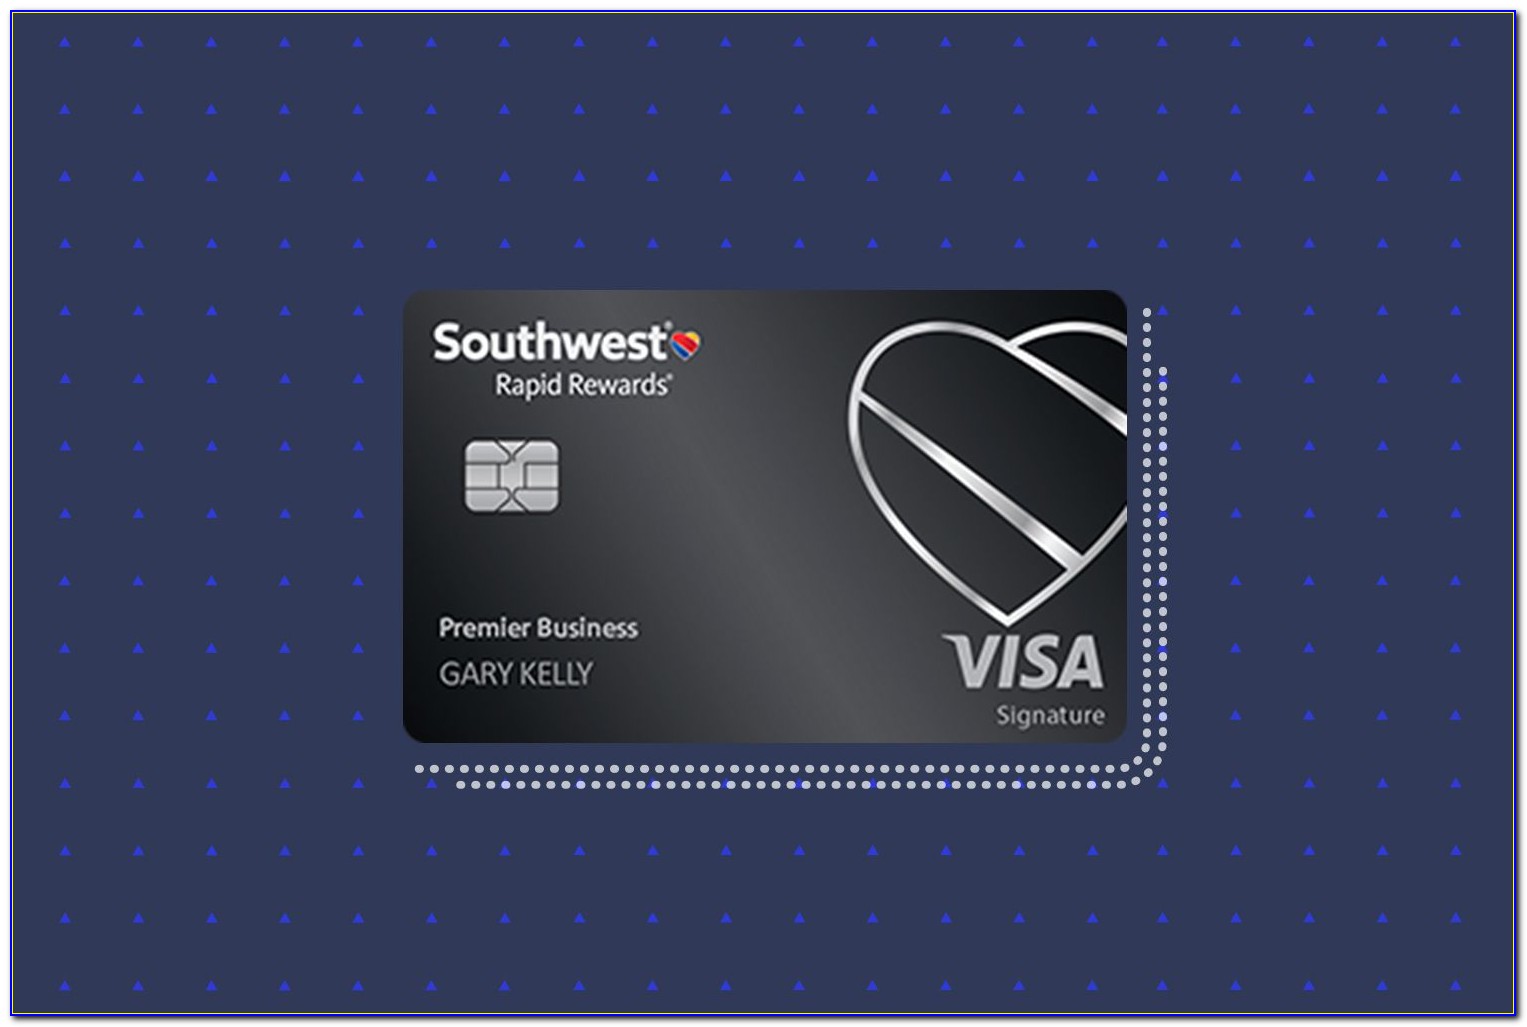 Southwest Rapid Rewards Business Cards